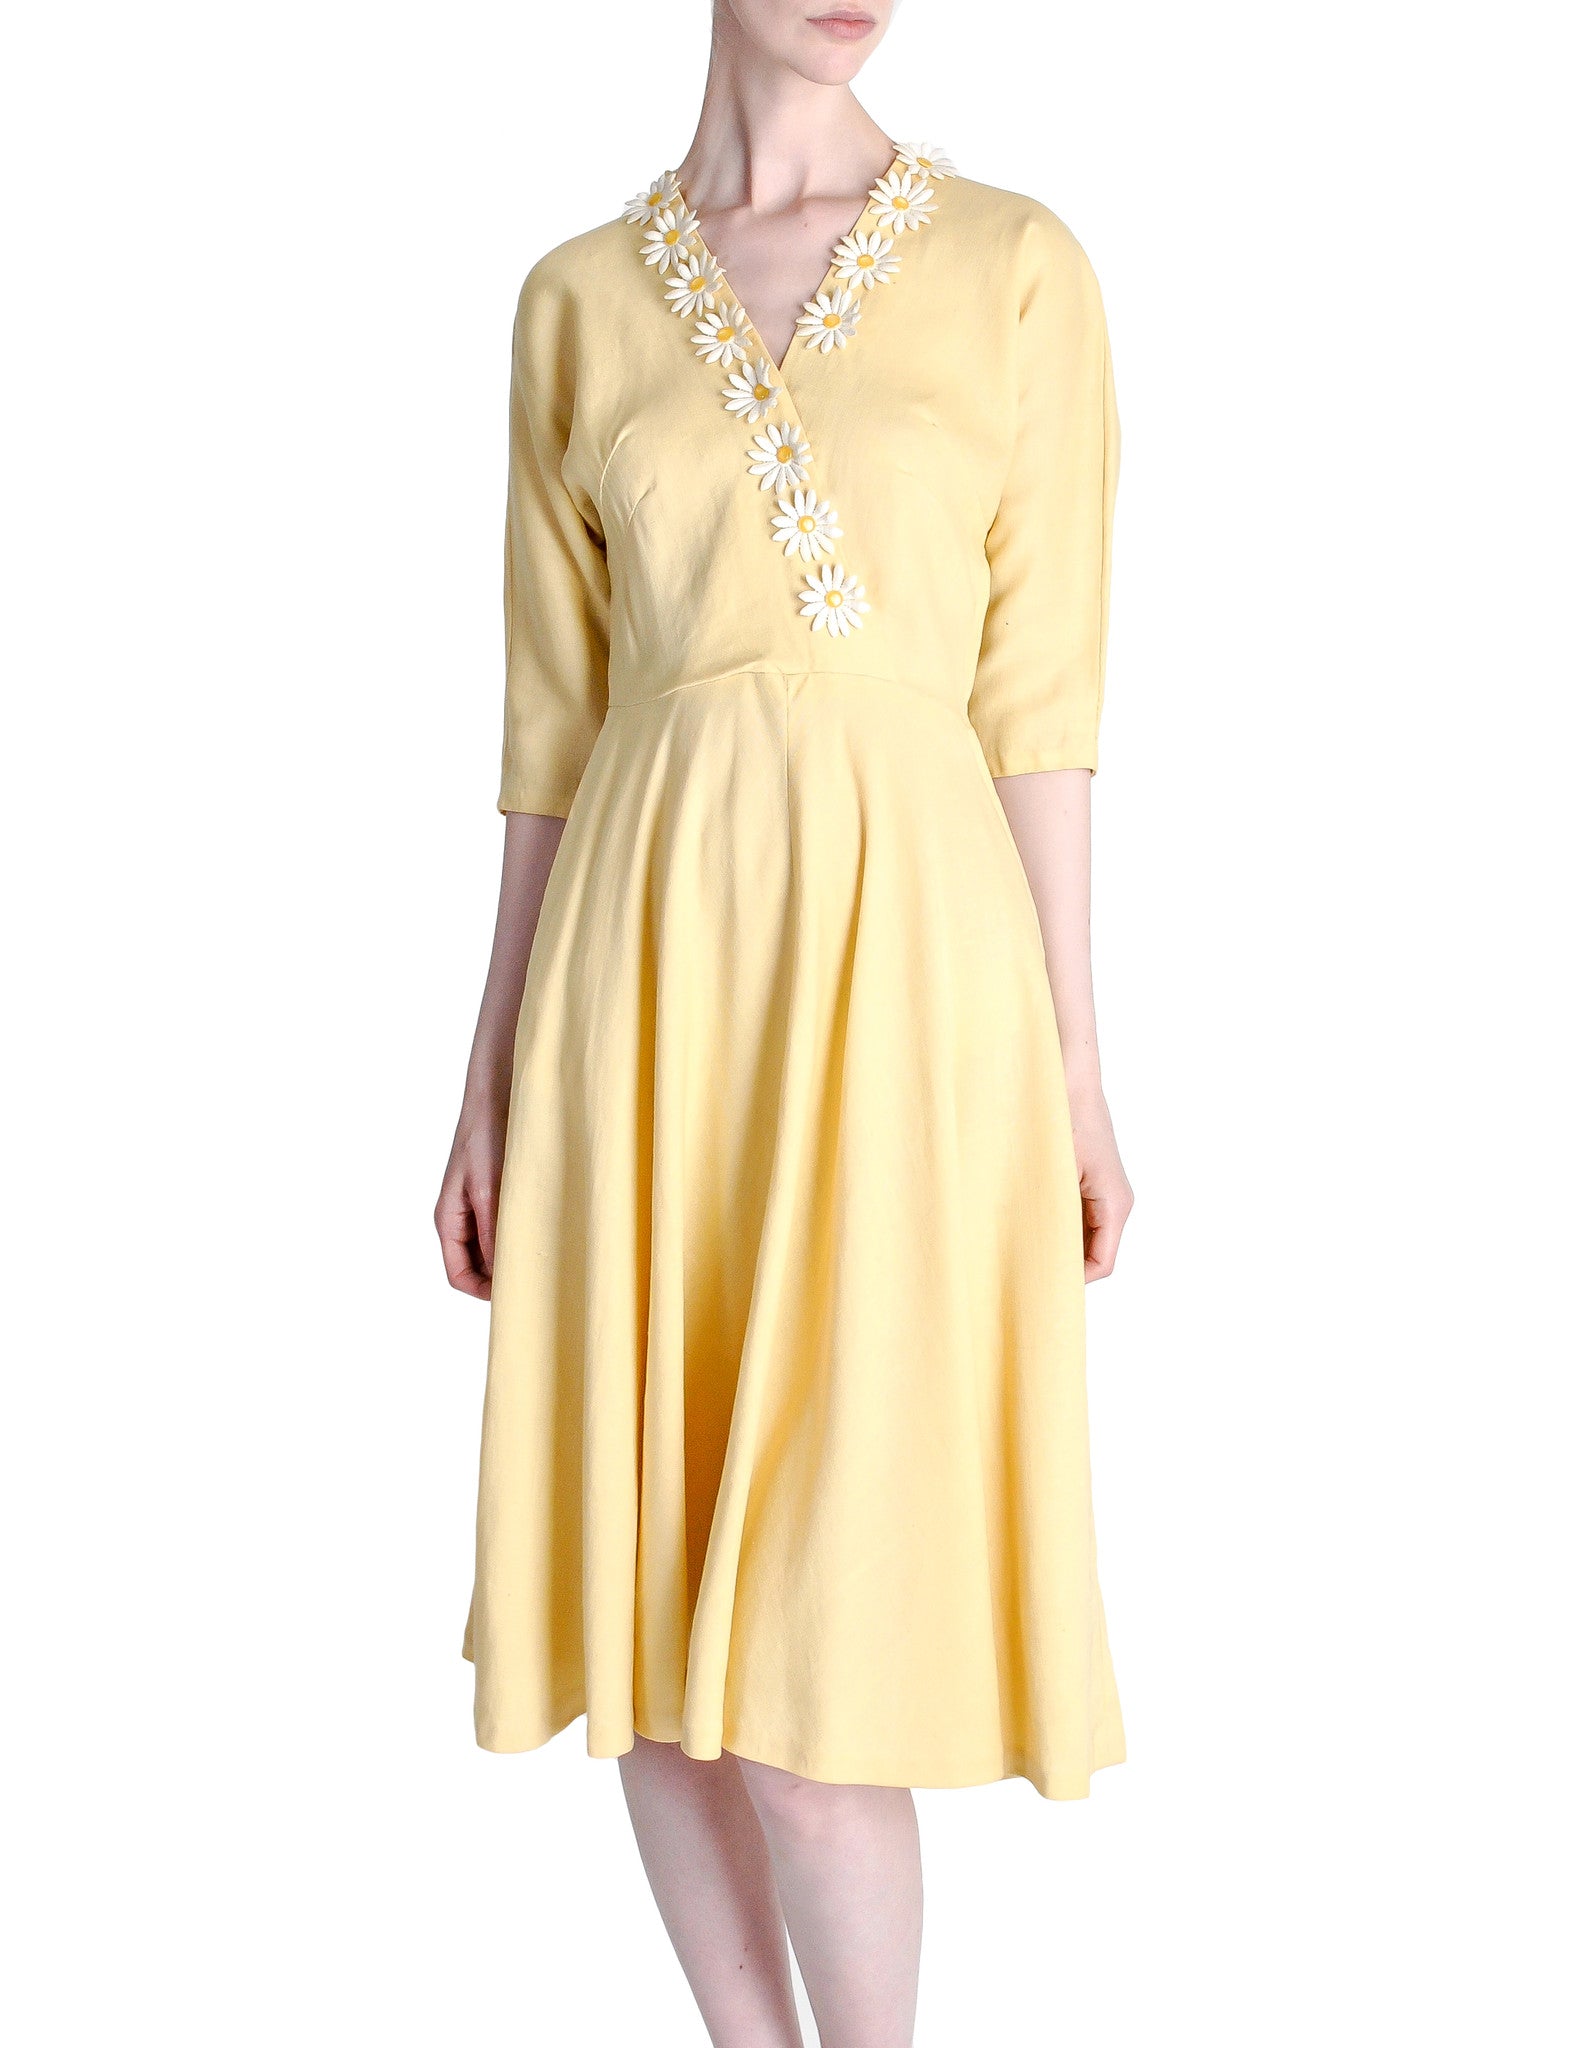 Vintage 1940s Yellow Linen Daisy Dress